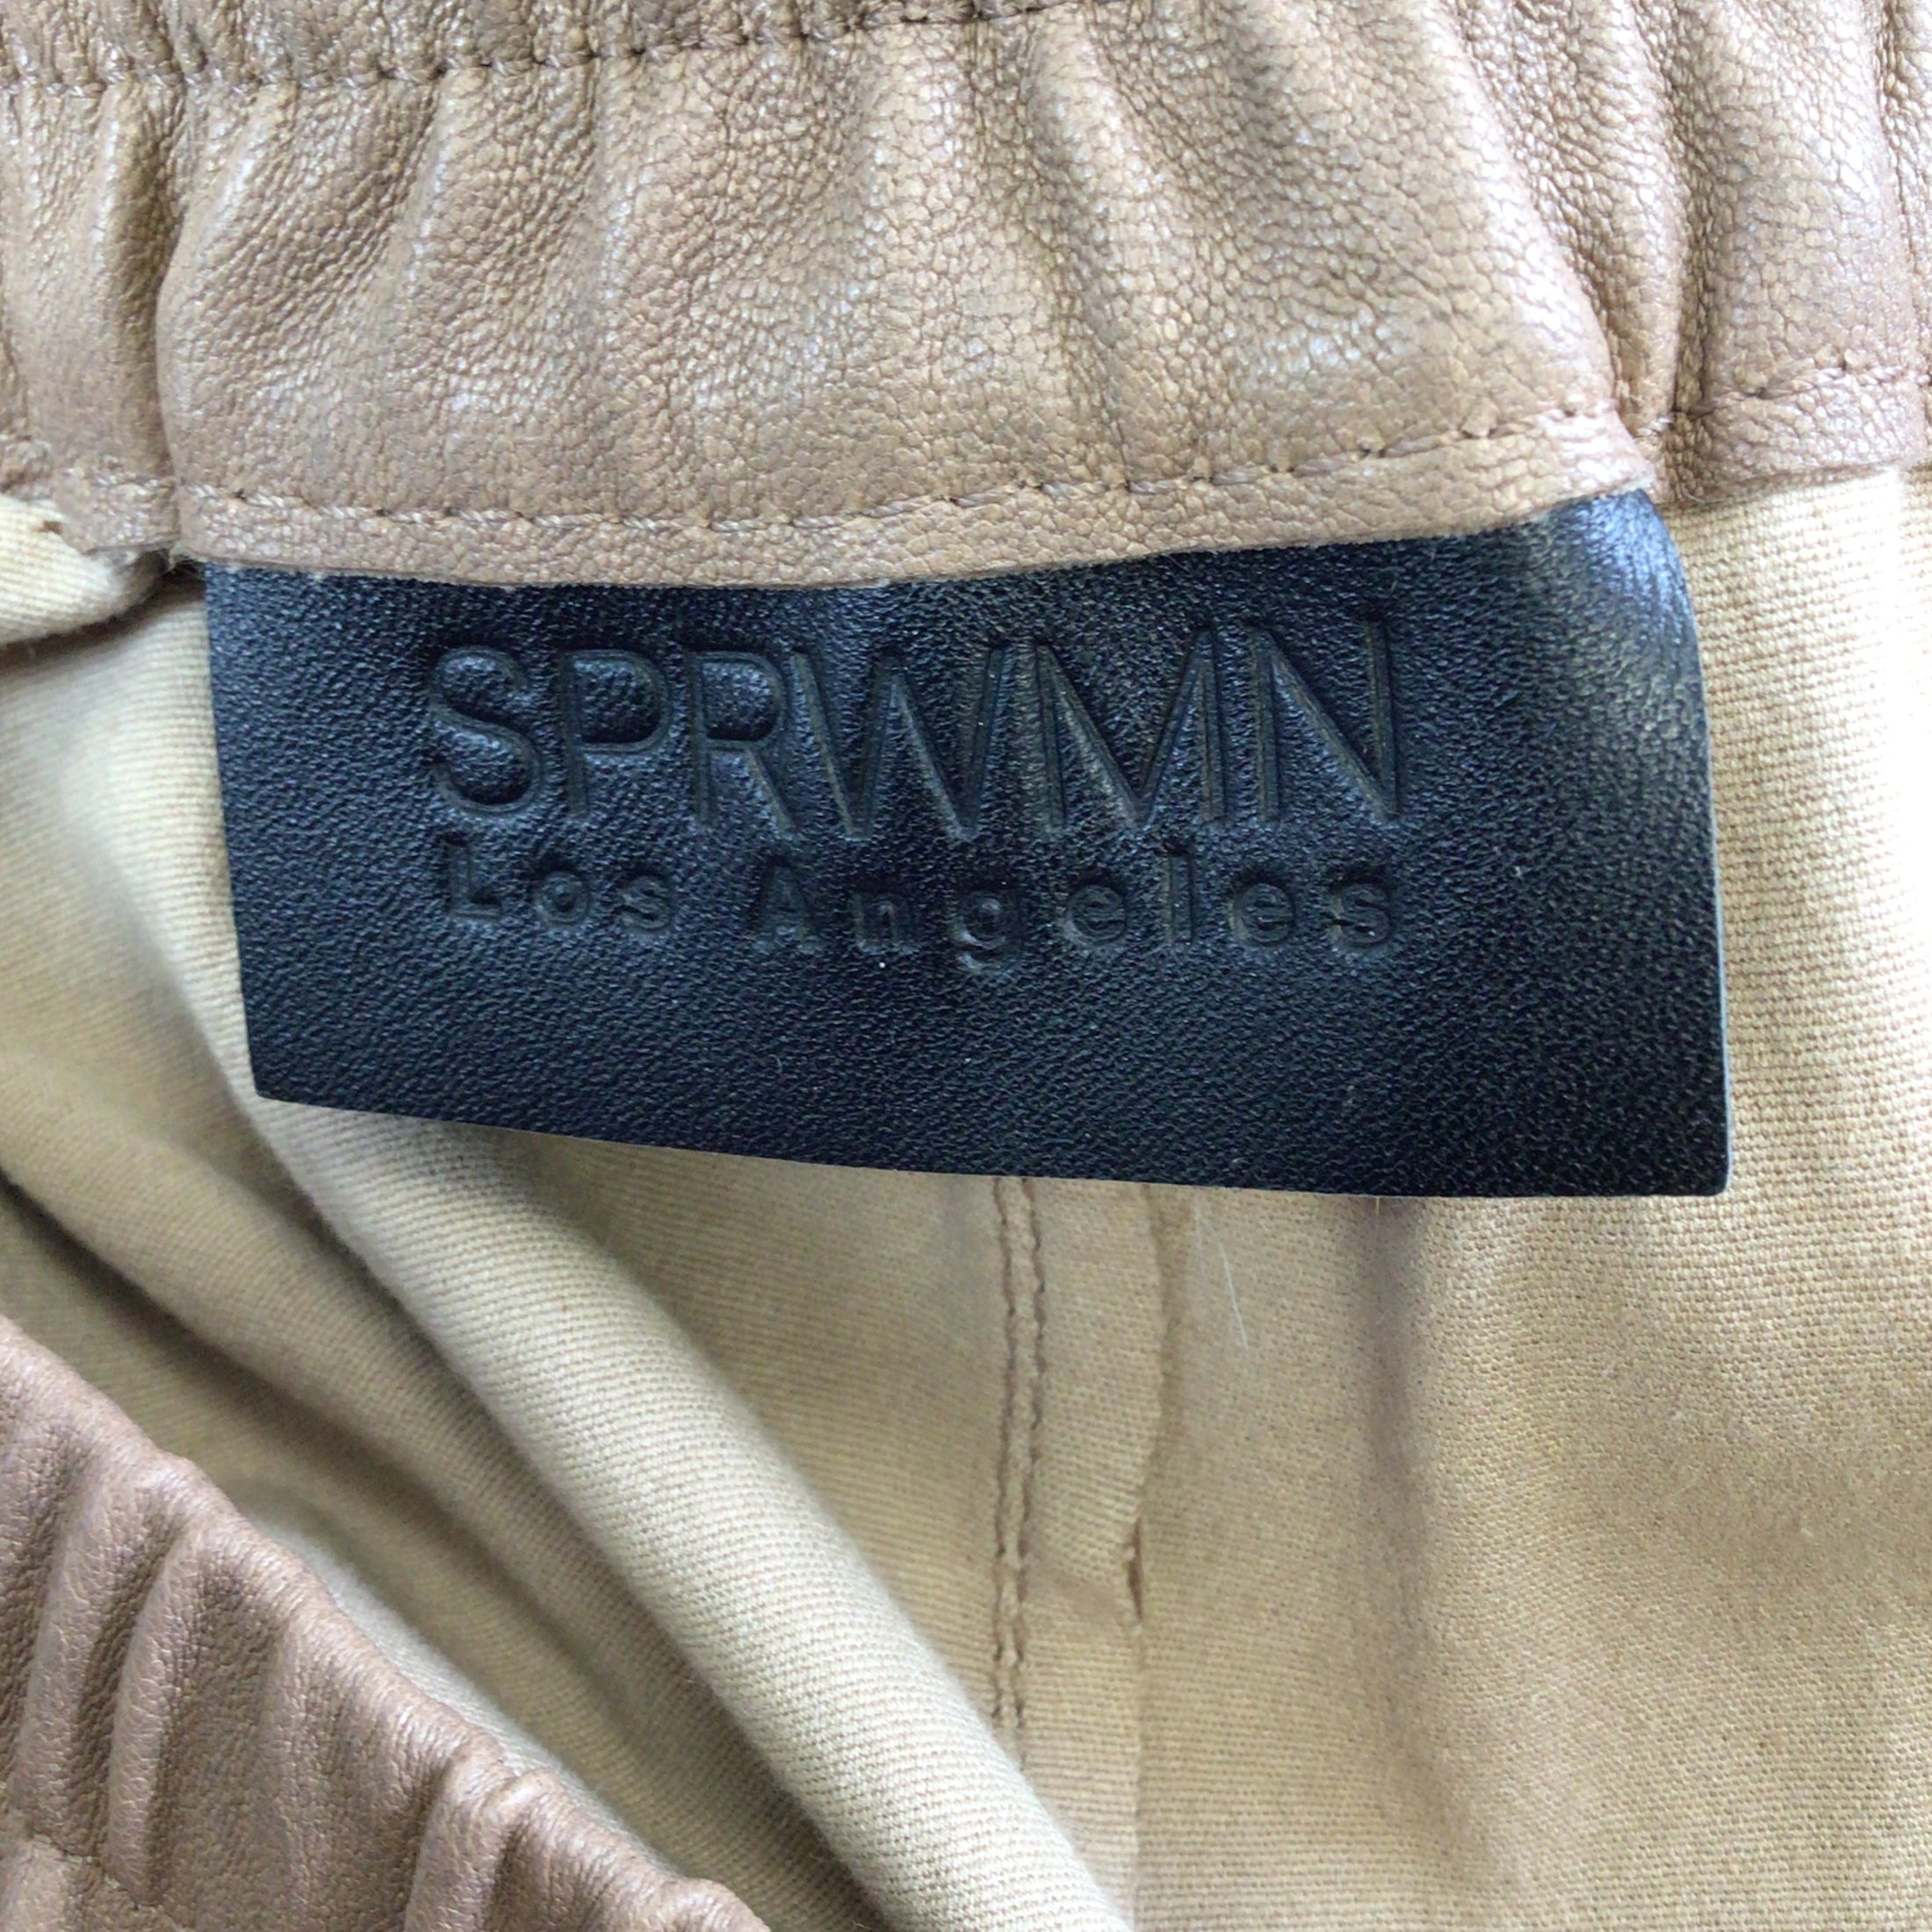 SPRWMN Tan Leather Cargo Pants